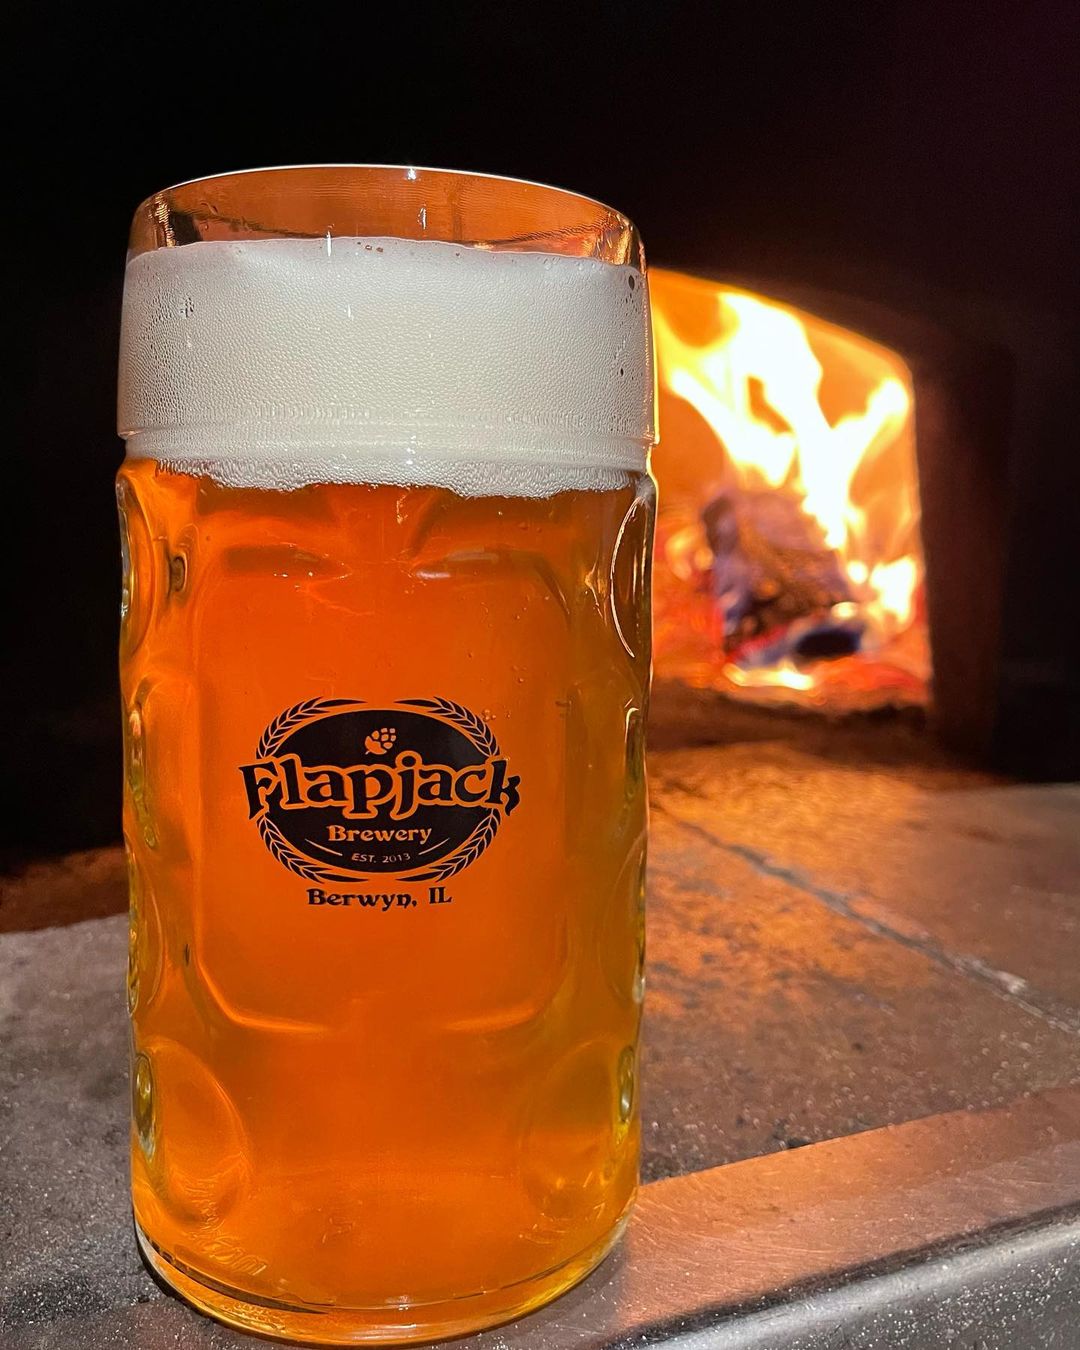 Glass of Berwyn's Flapjack Brewery's latest beer